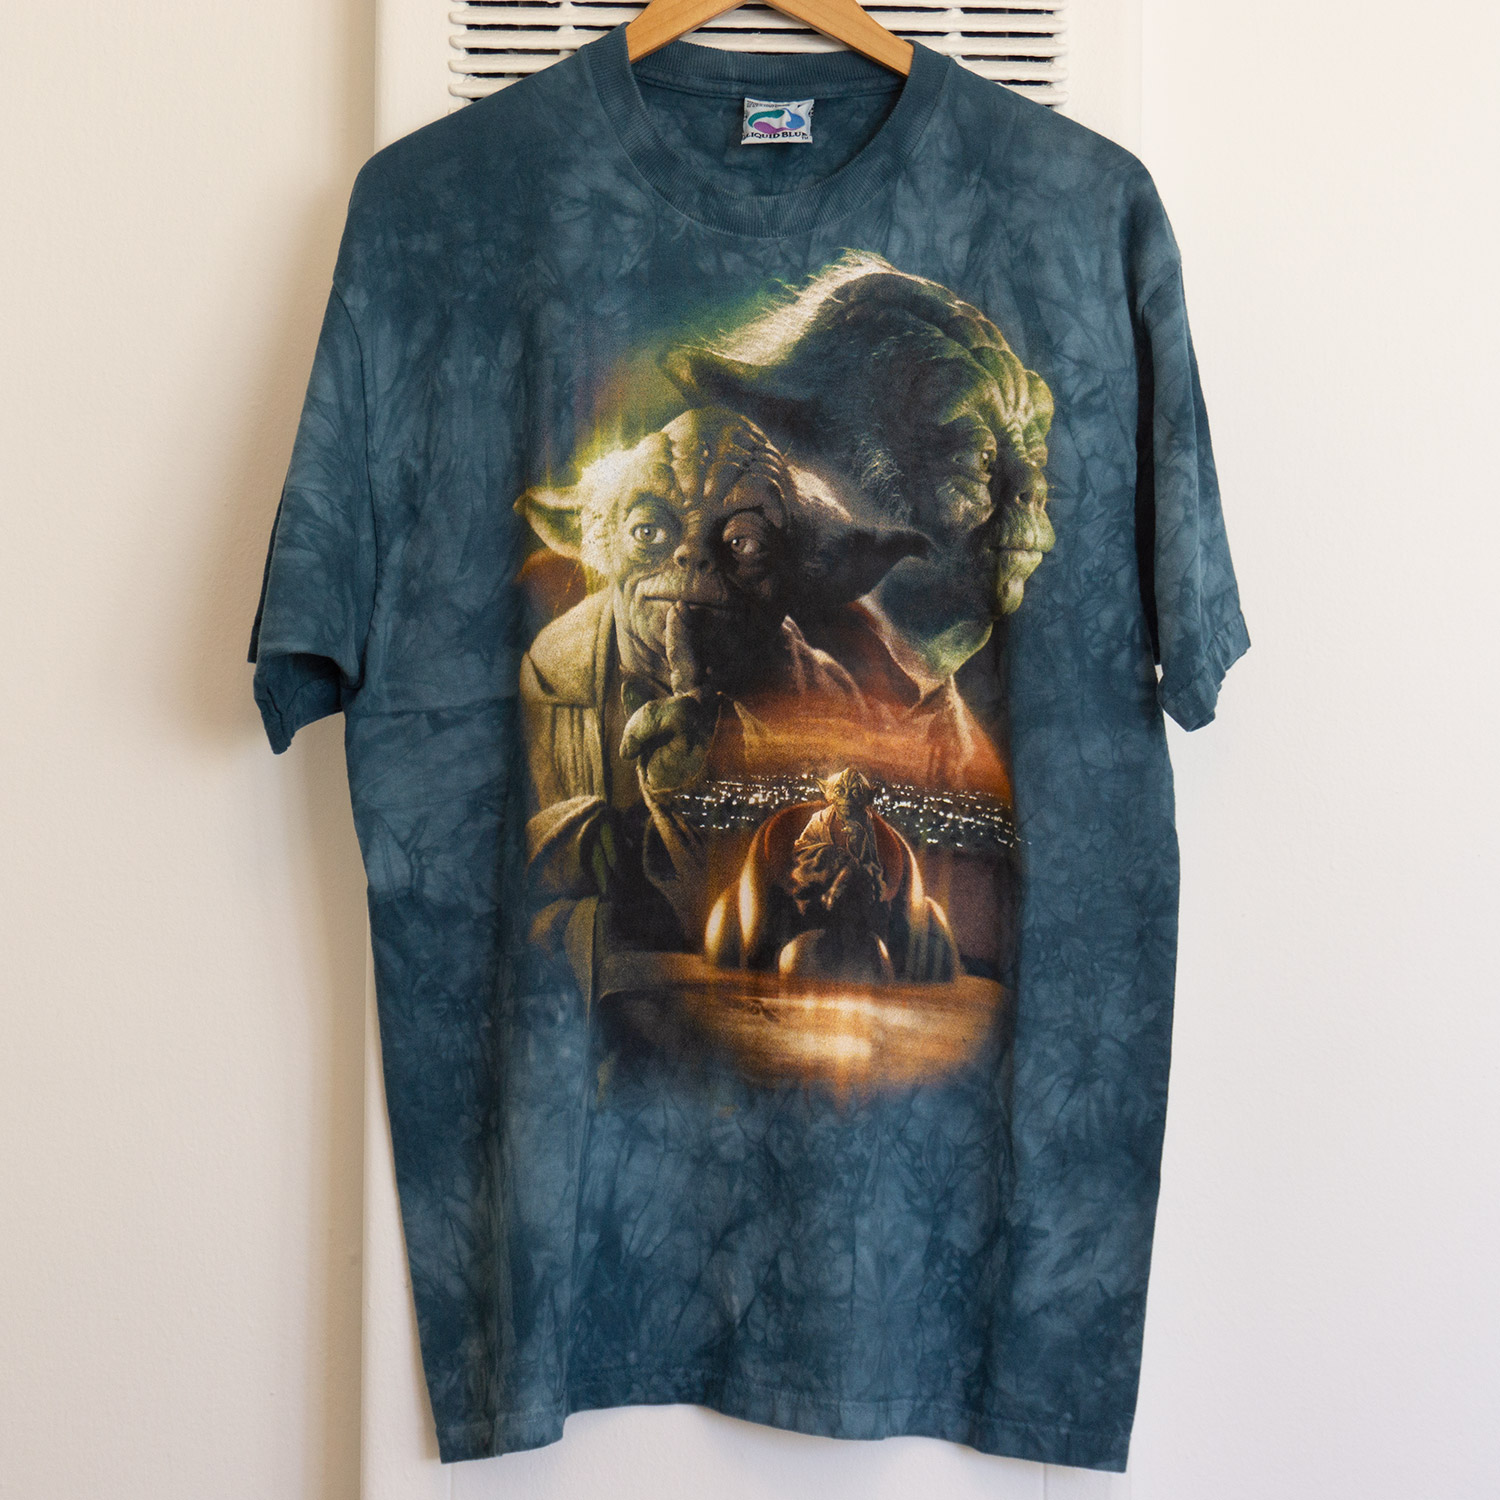 Vintage Star Wars Yoda The Phantom Menace T-shirt, Front